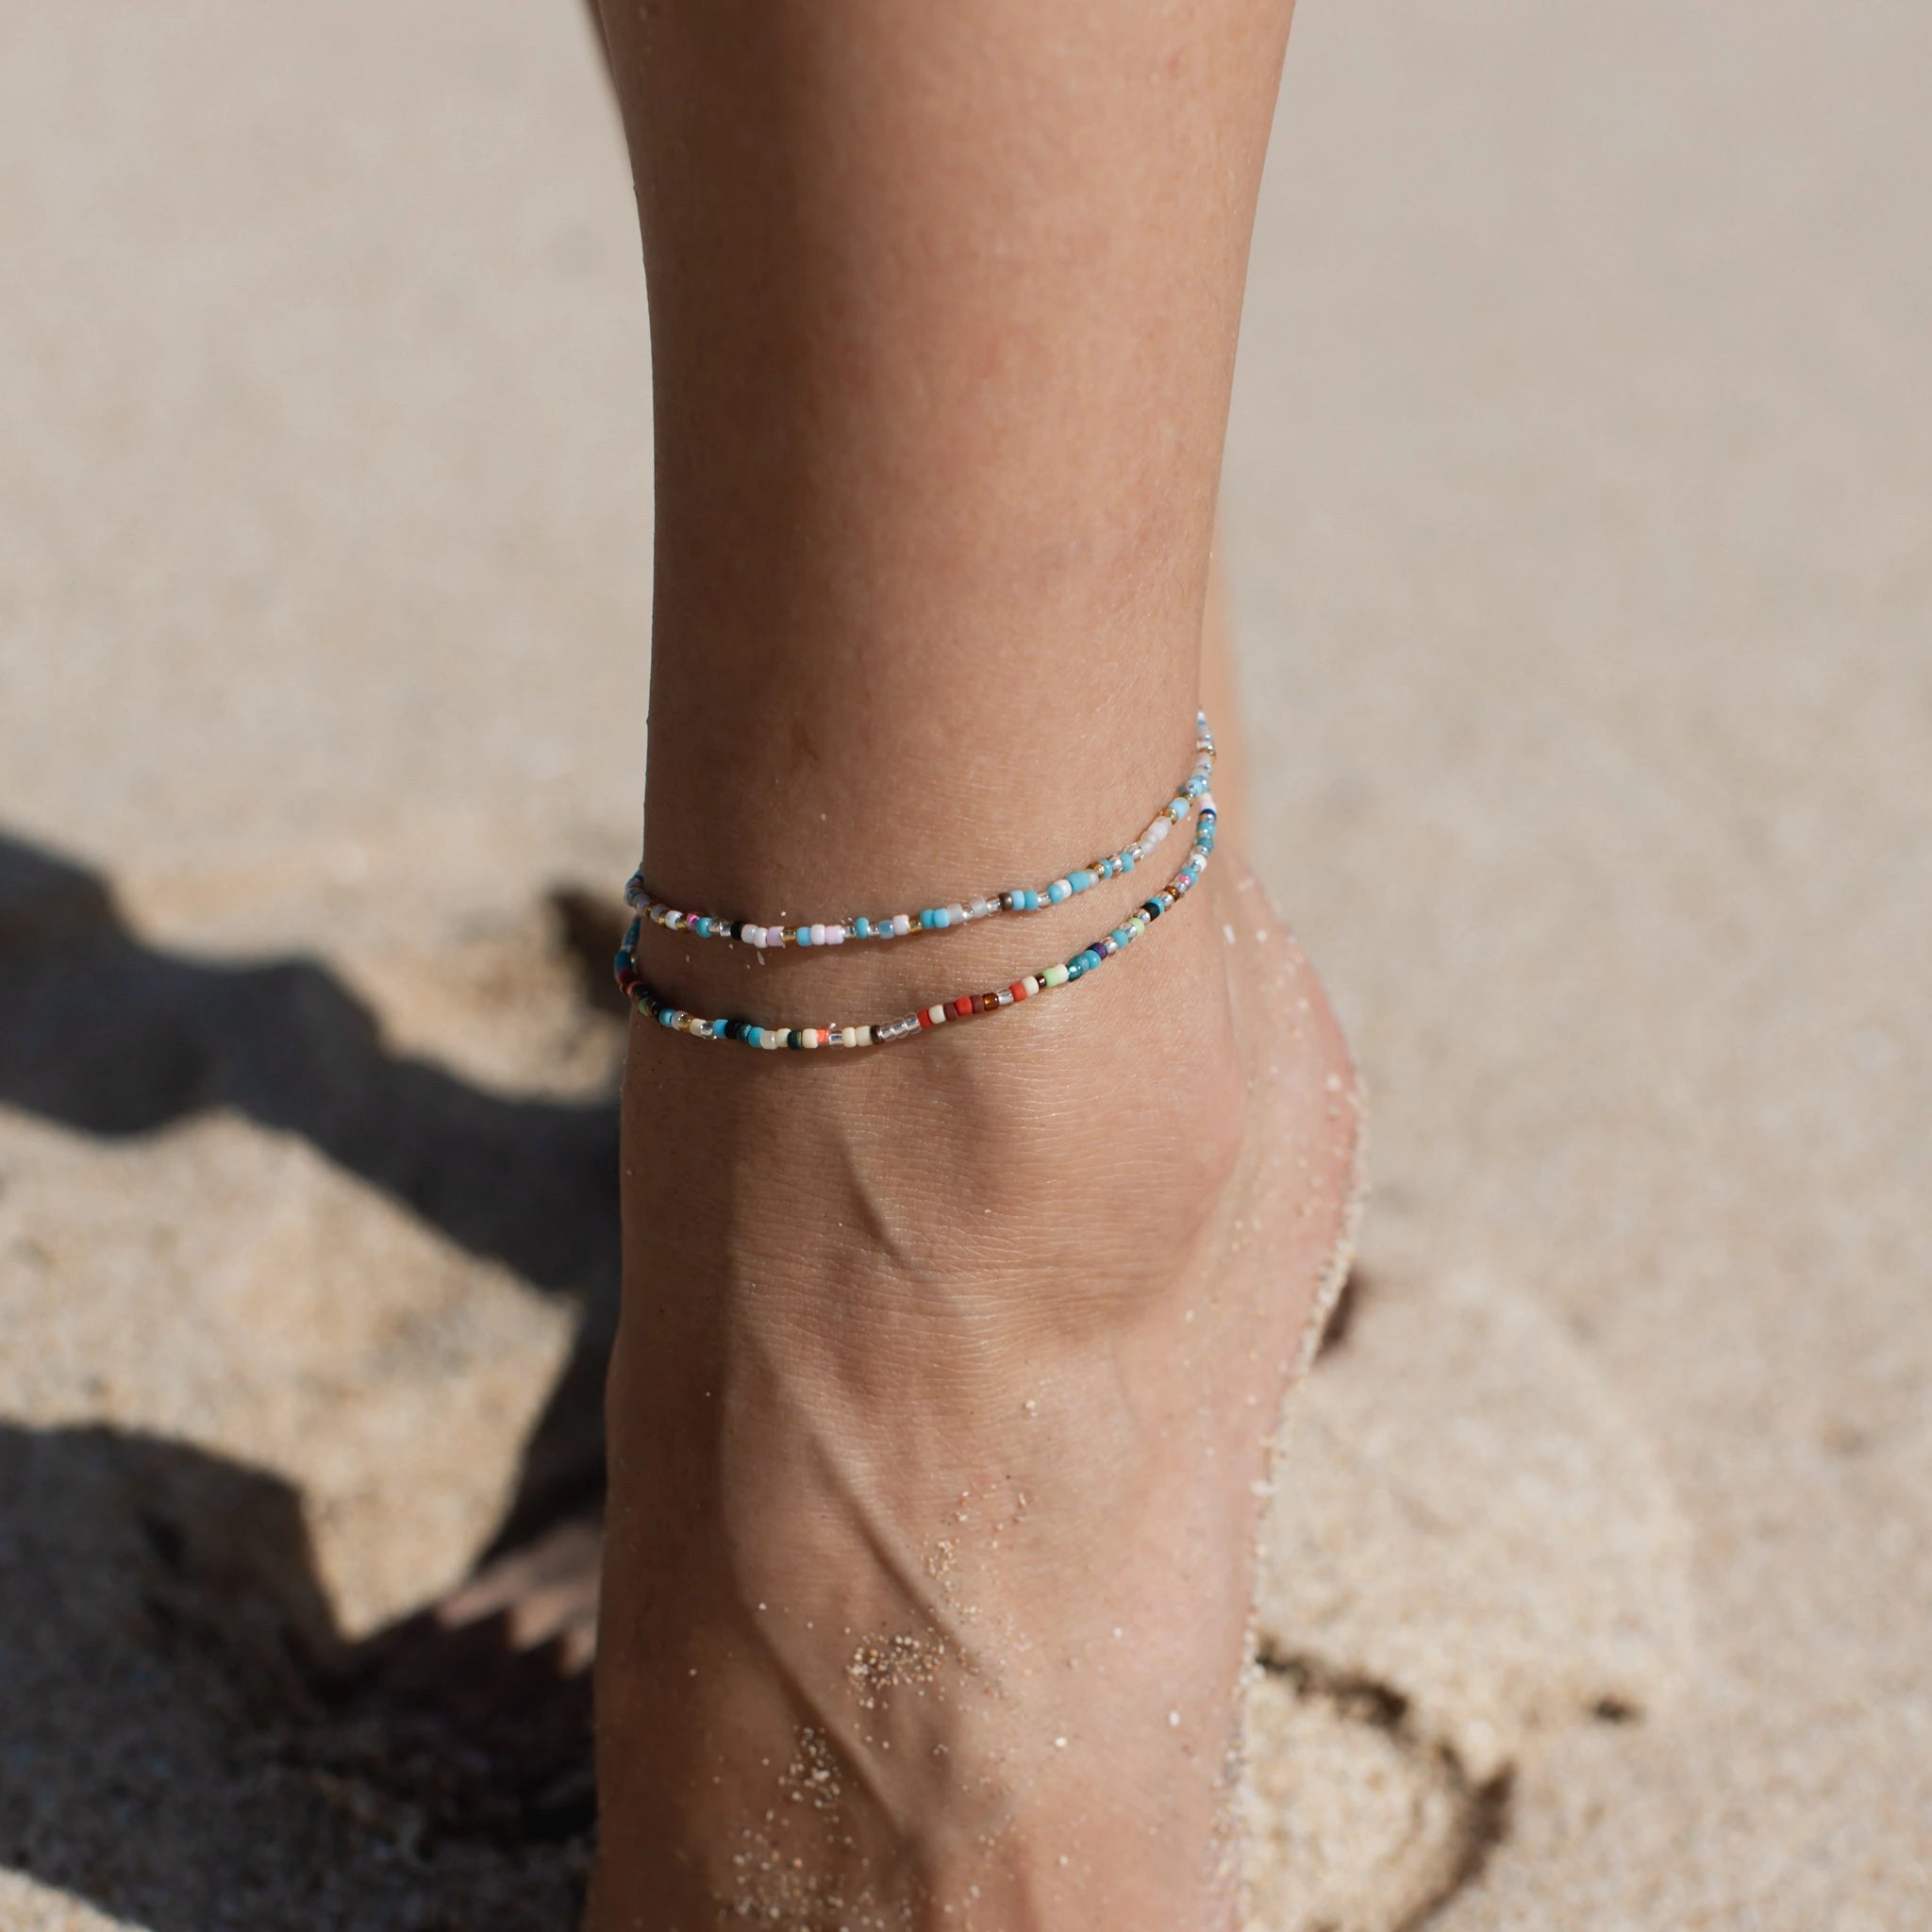 The Leg Elastic Foot Chain Ankle Bracelet Handmade Beaded Anklet Beach  Jewelry at Rs 1379.00 | गारमेंट स्टॉक लॉट - Rajeshwar Impex, Mumbai | ID:  2851665735955